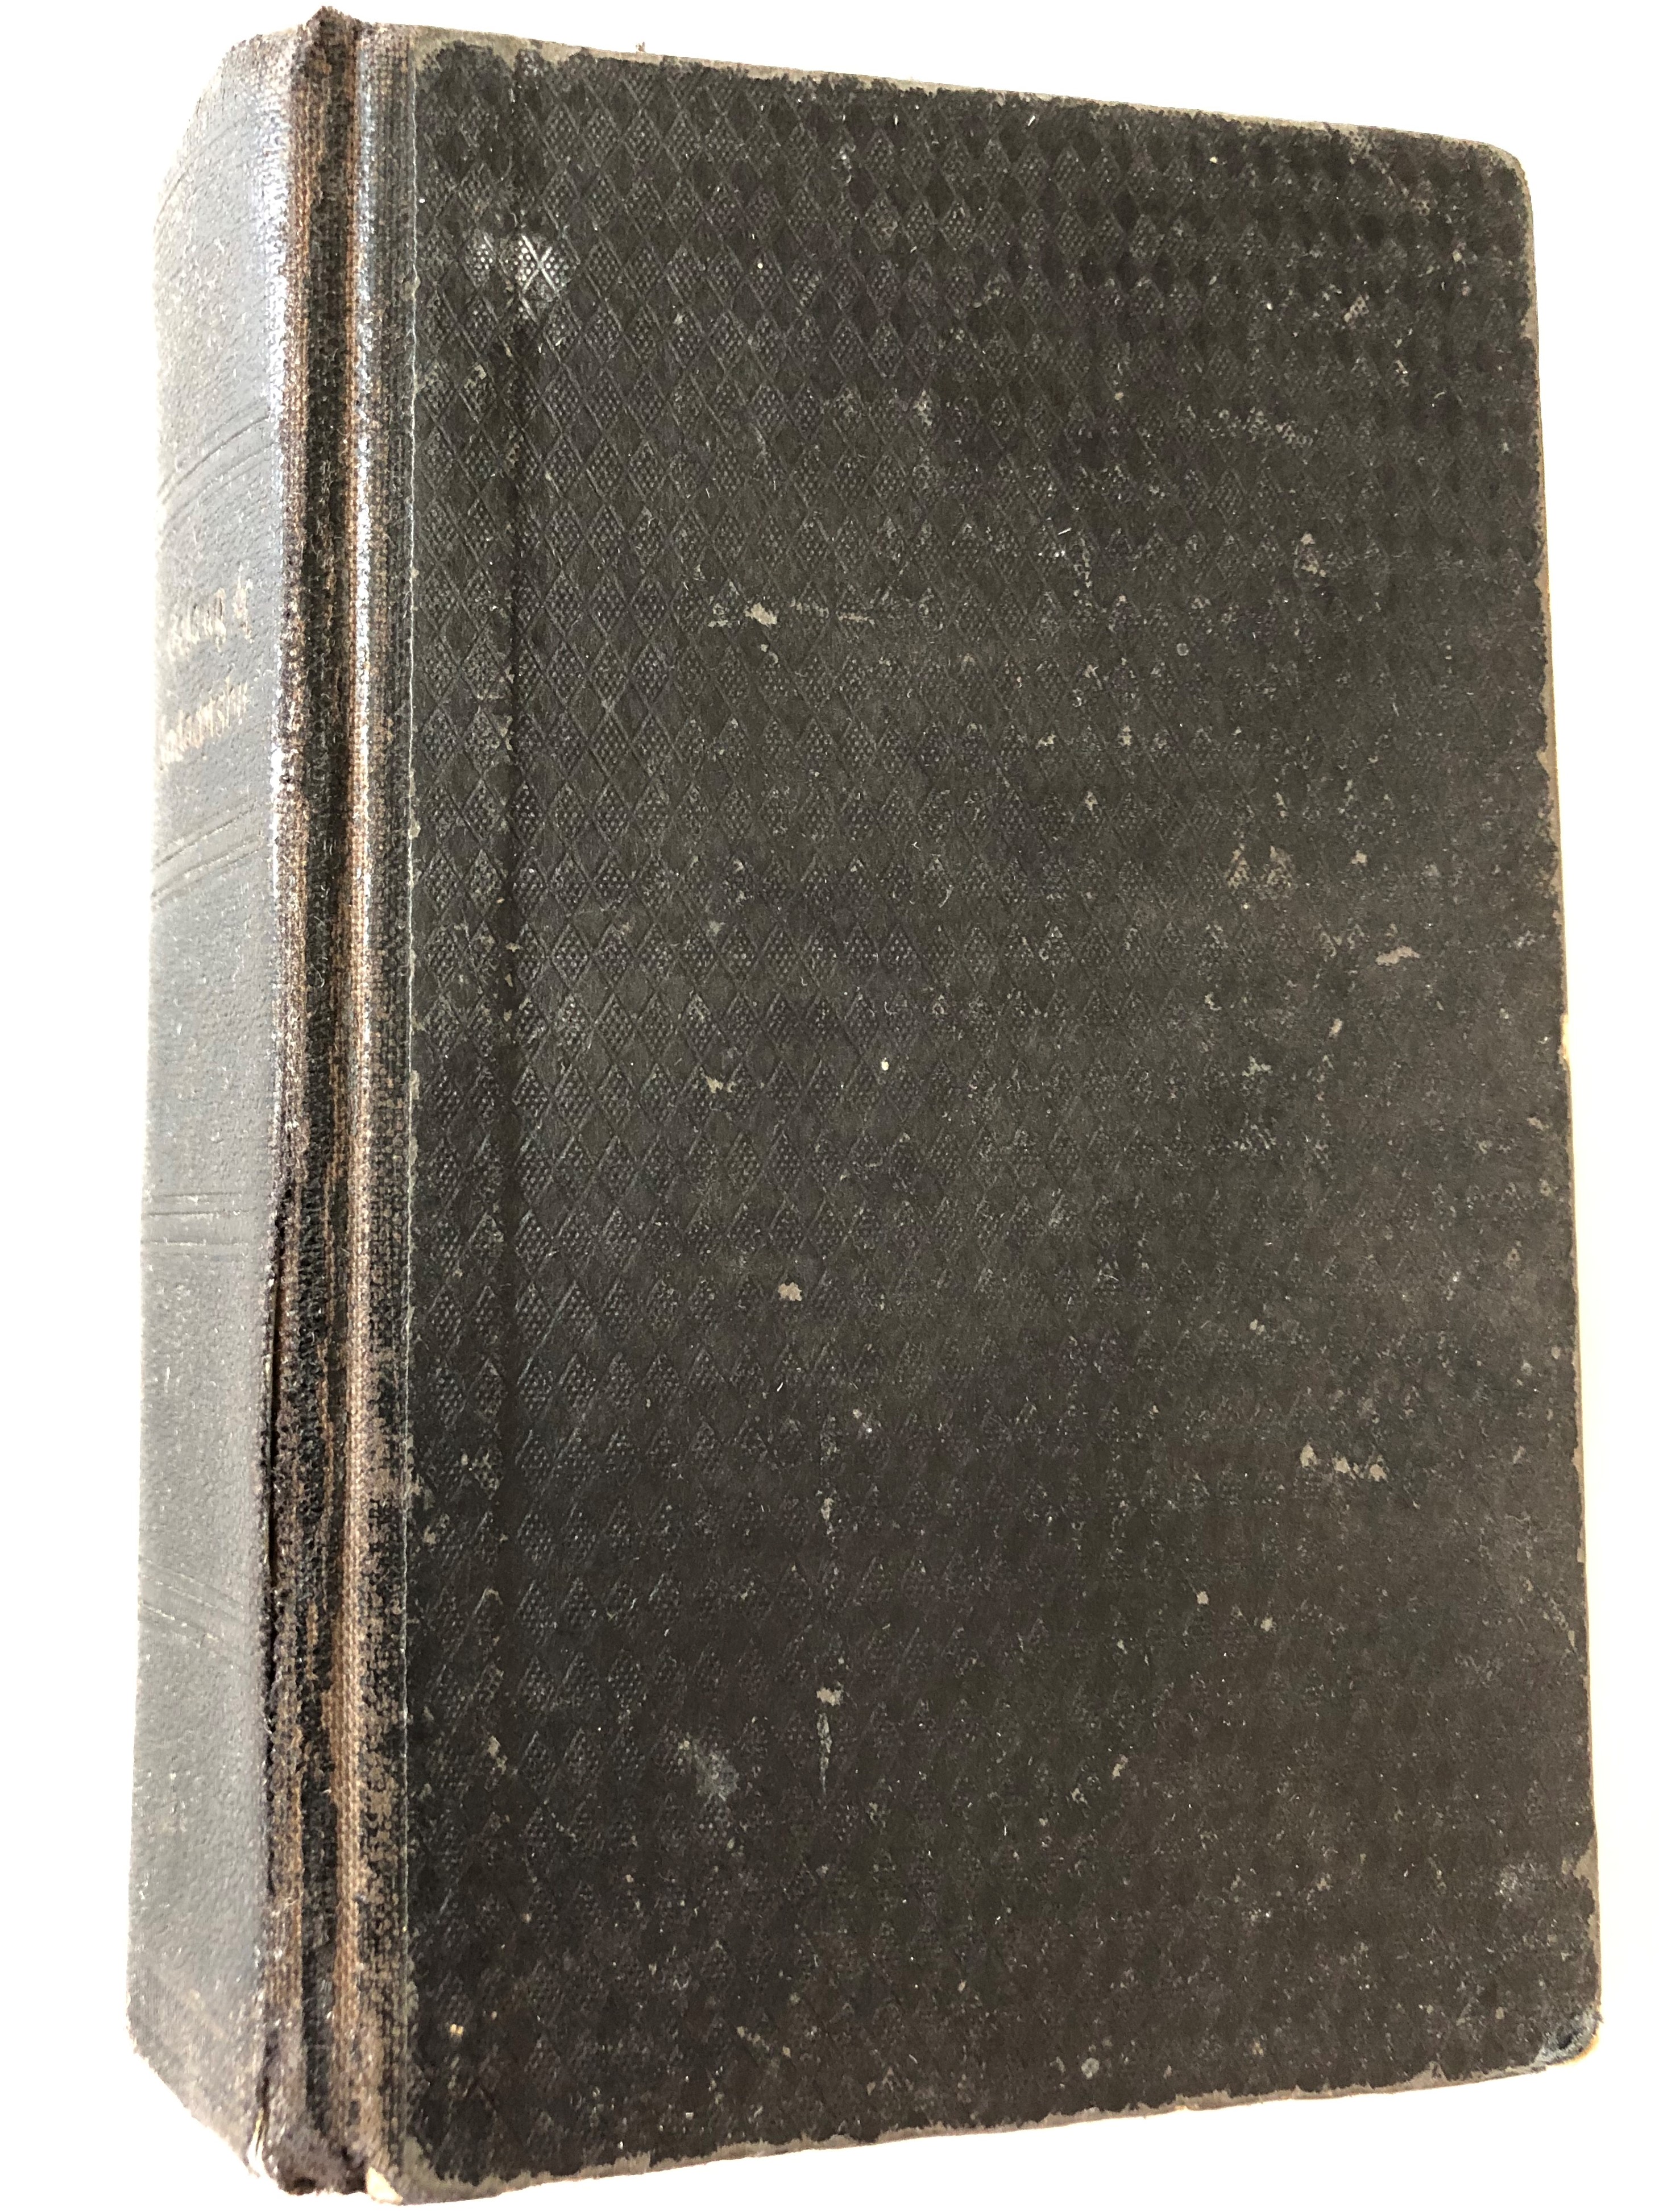 katoliches-gesang-und-andachtsbuch-german-language-catholic-song-and-prayerbook-for-use-in-common-worship-bisch-flichen-kanzlei-rottenburg-antique-german-book-hardcover-1907-1-.jpg